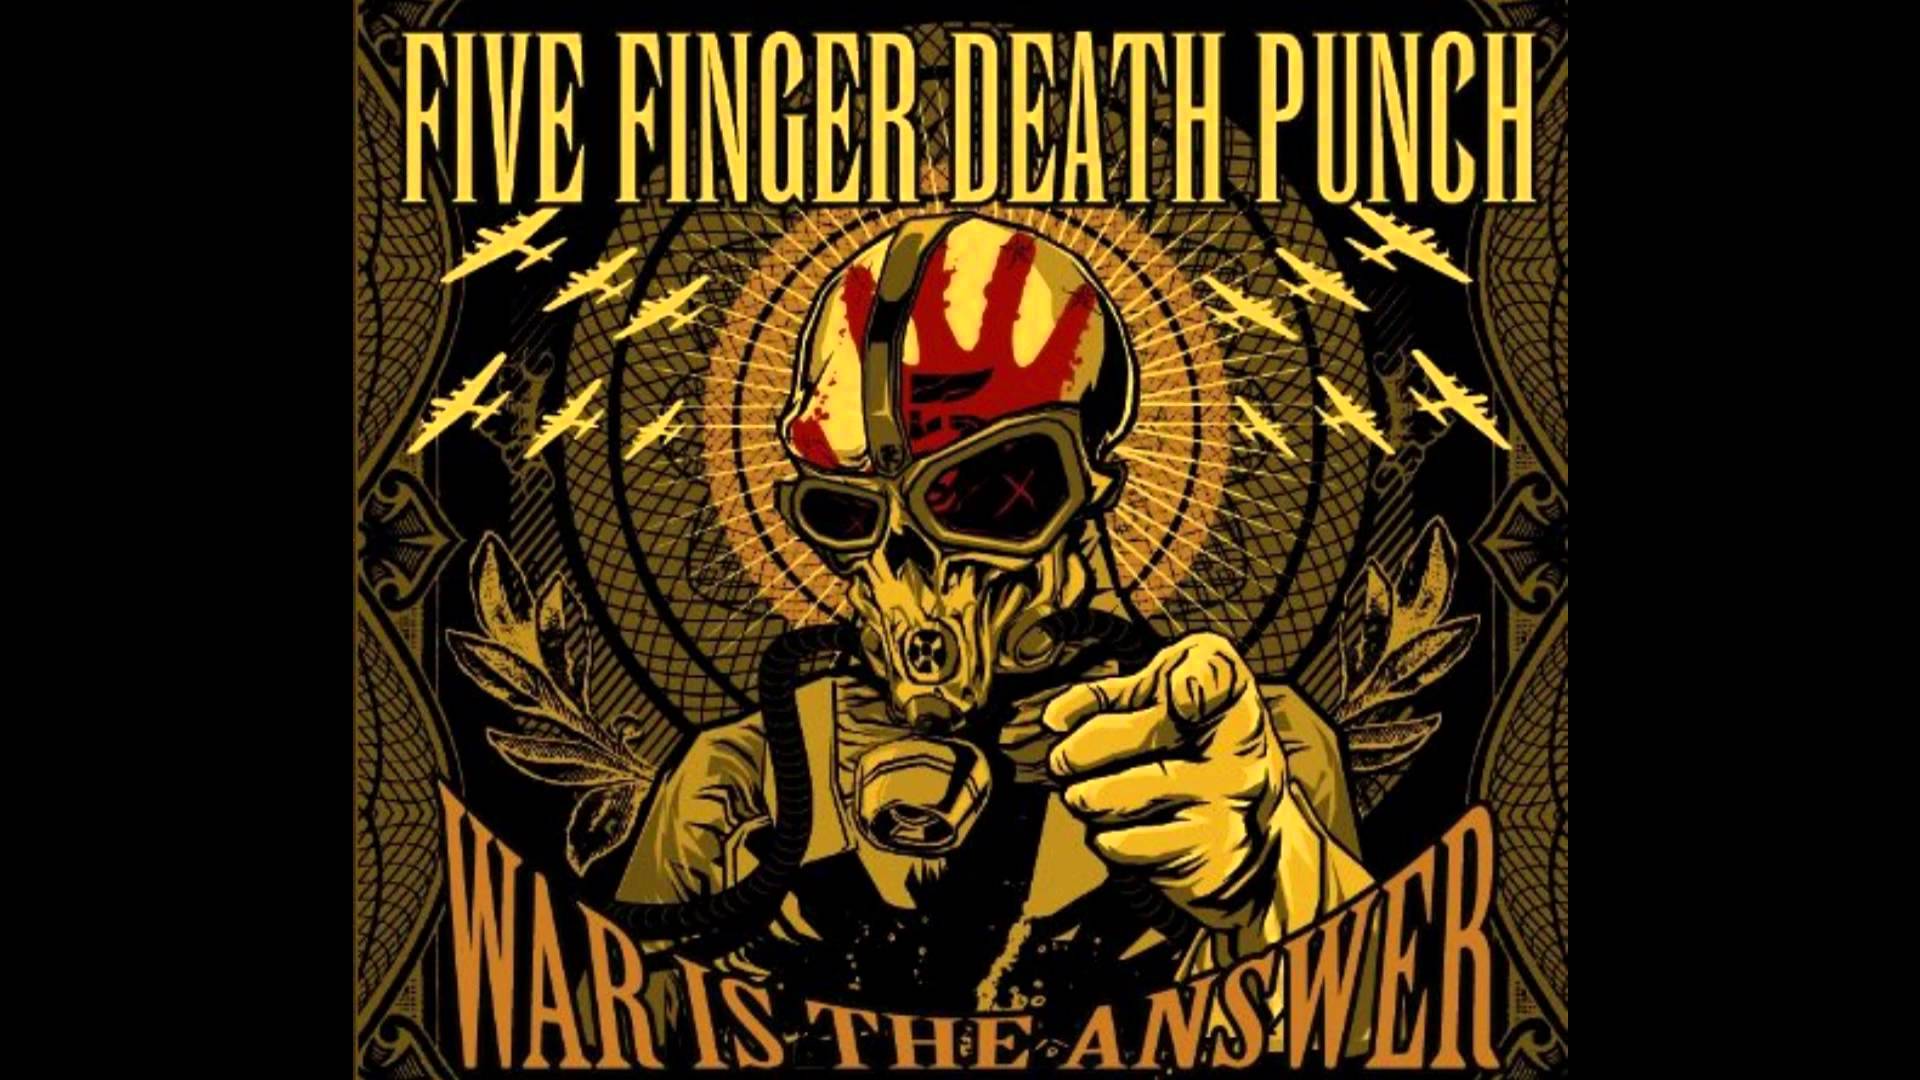 Wallpaper Five Finger Death Punch